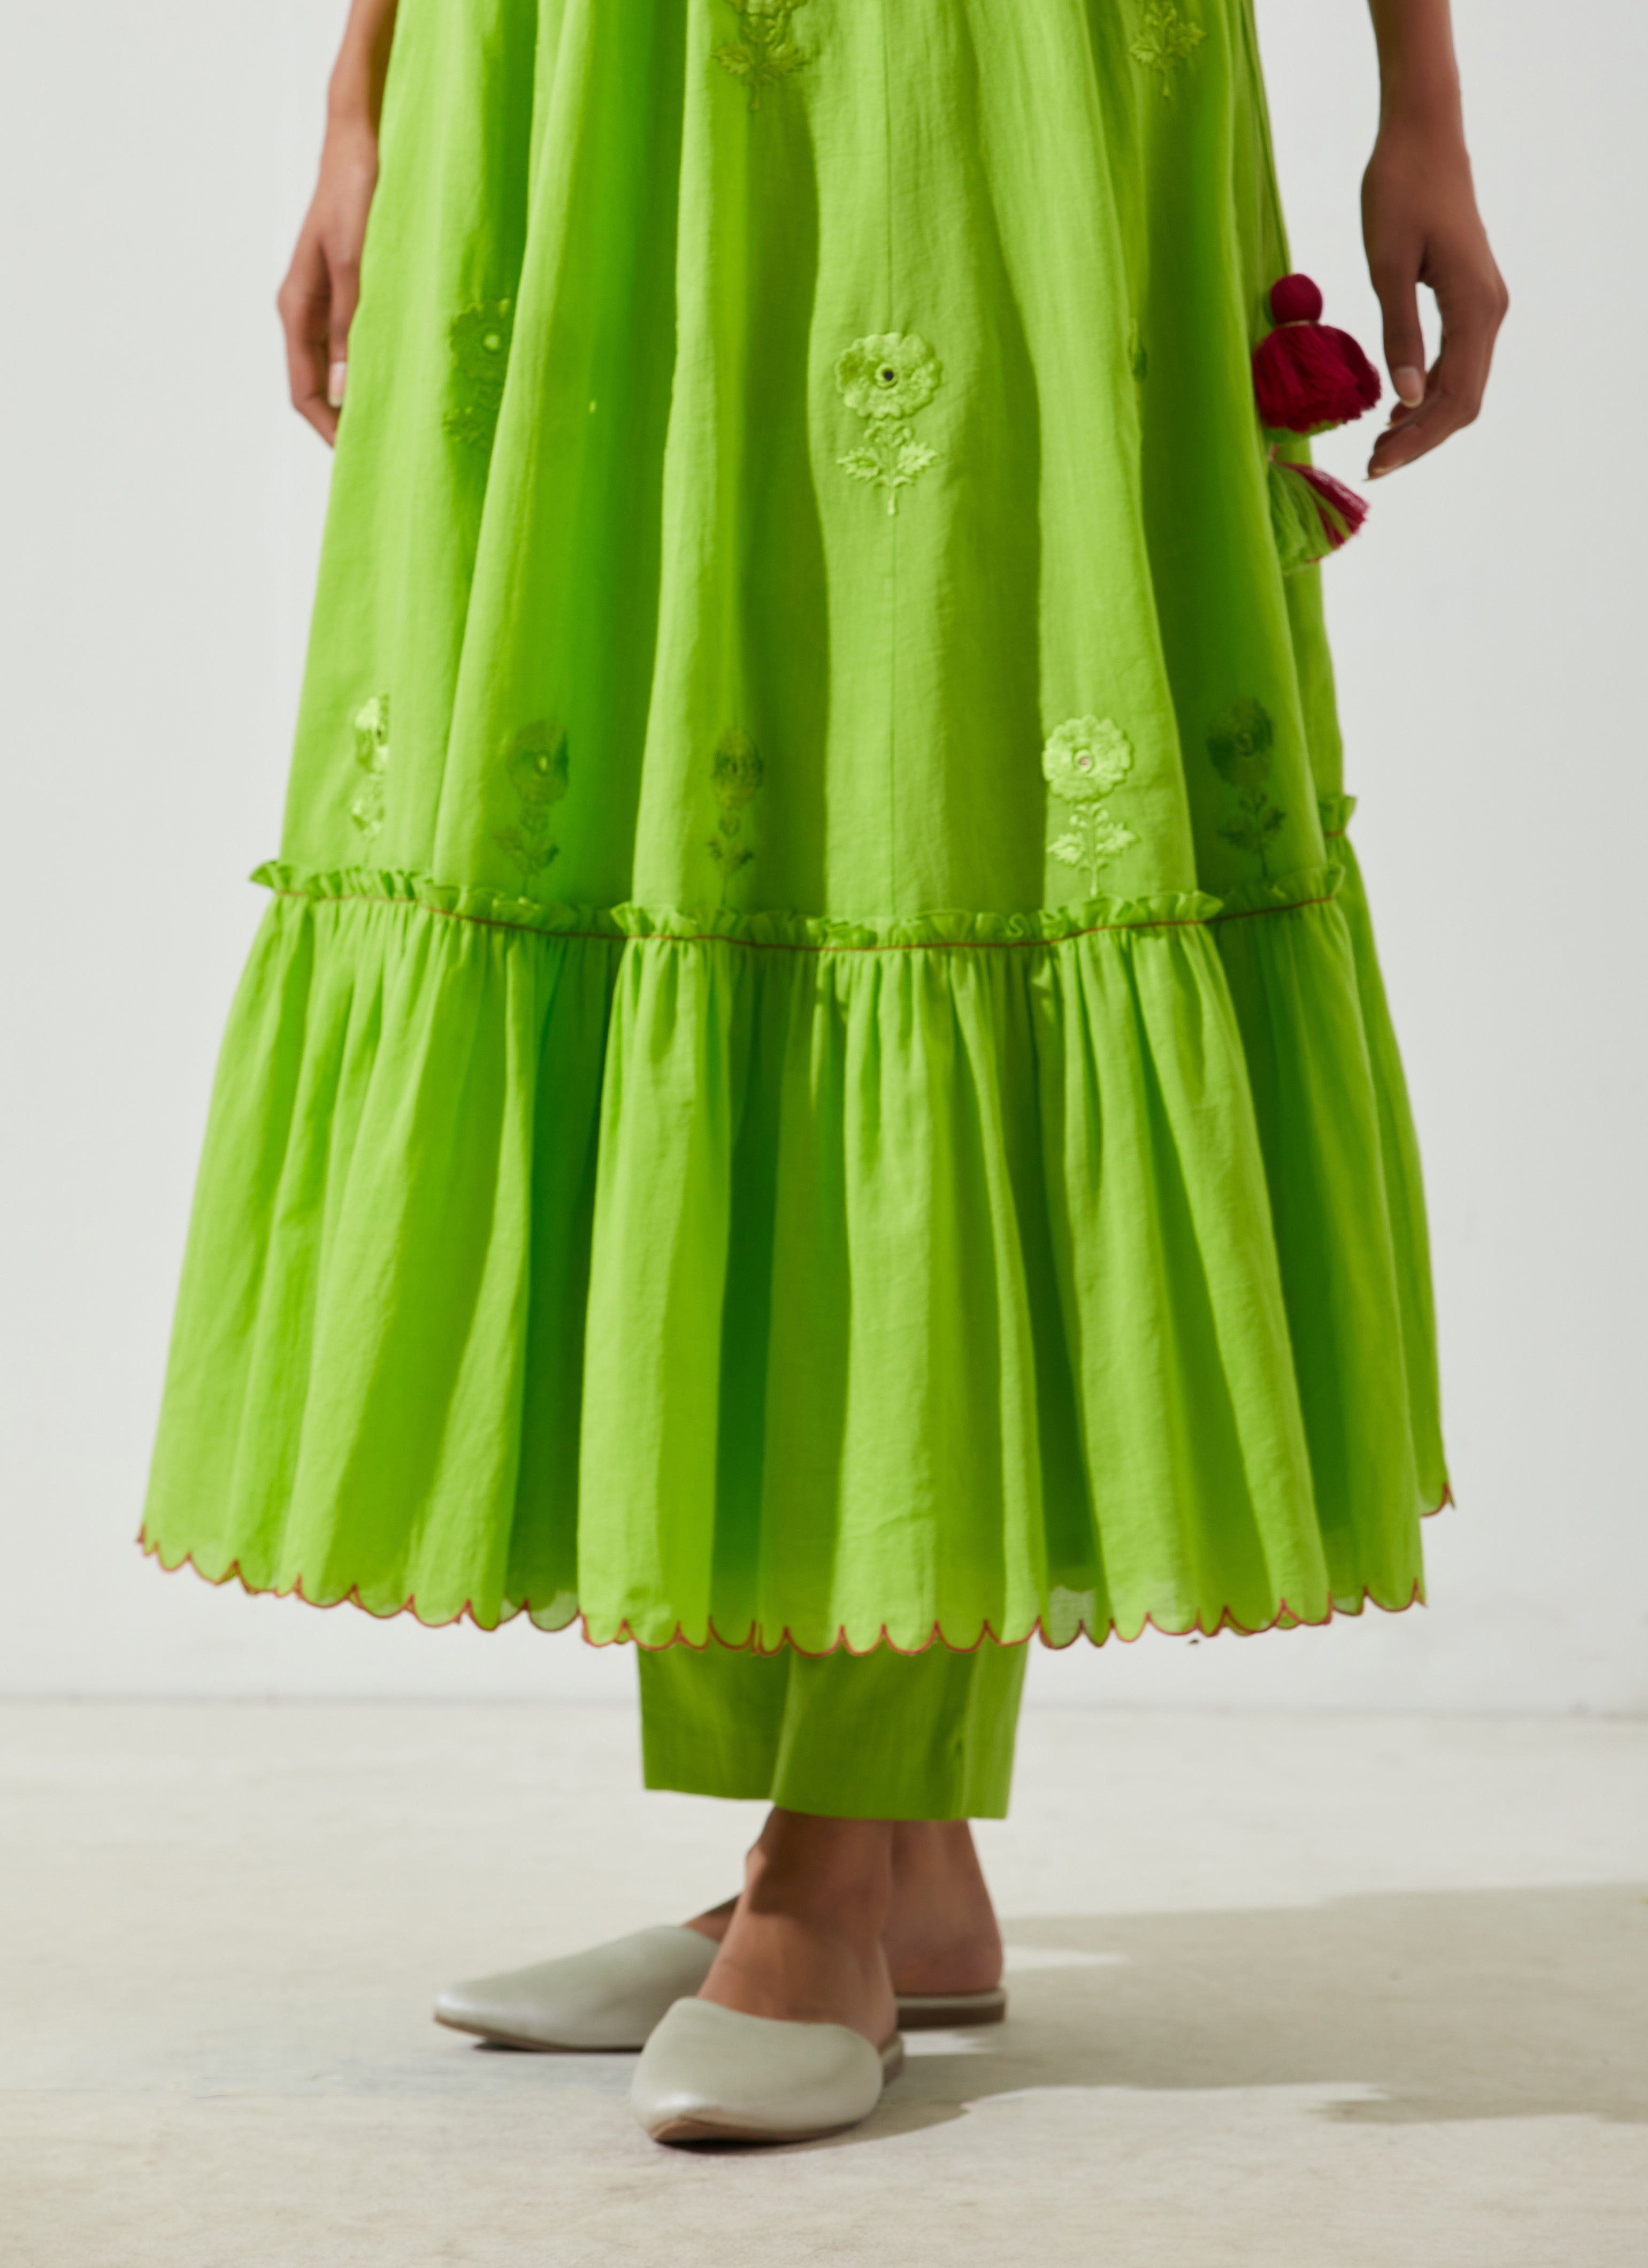 Label Earthen - Nag Champa Green Dress